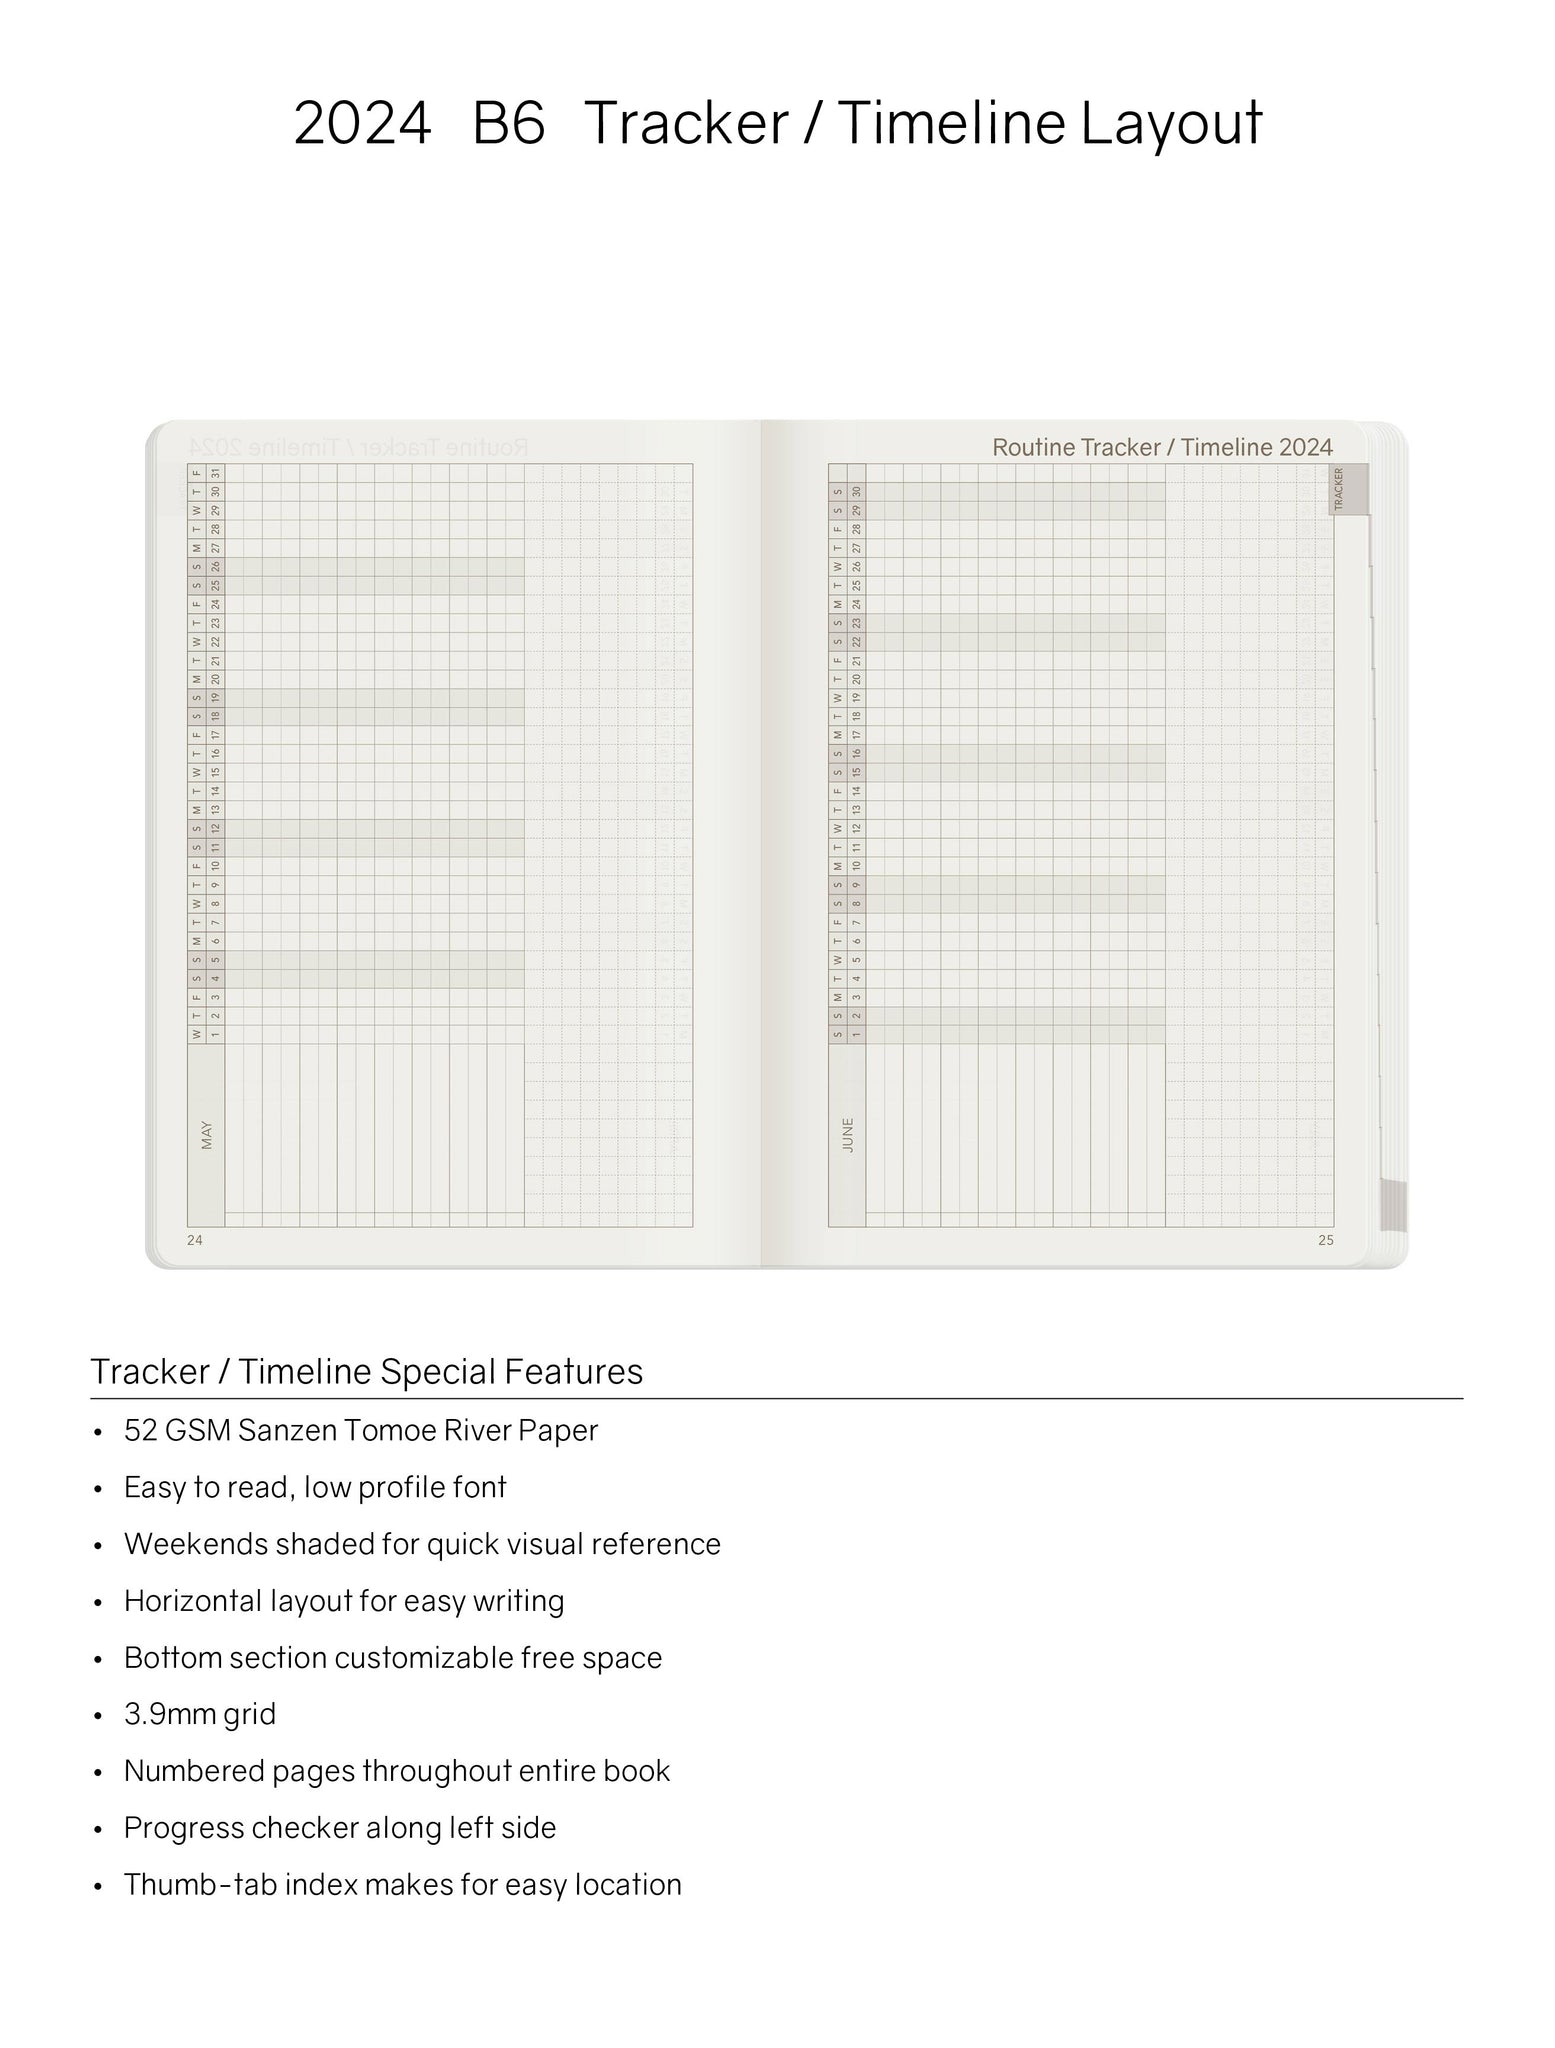 PRE-ORDER 2024 B6 Weekly Planner - 52gsm Tomoe River Paper (All in One)